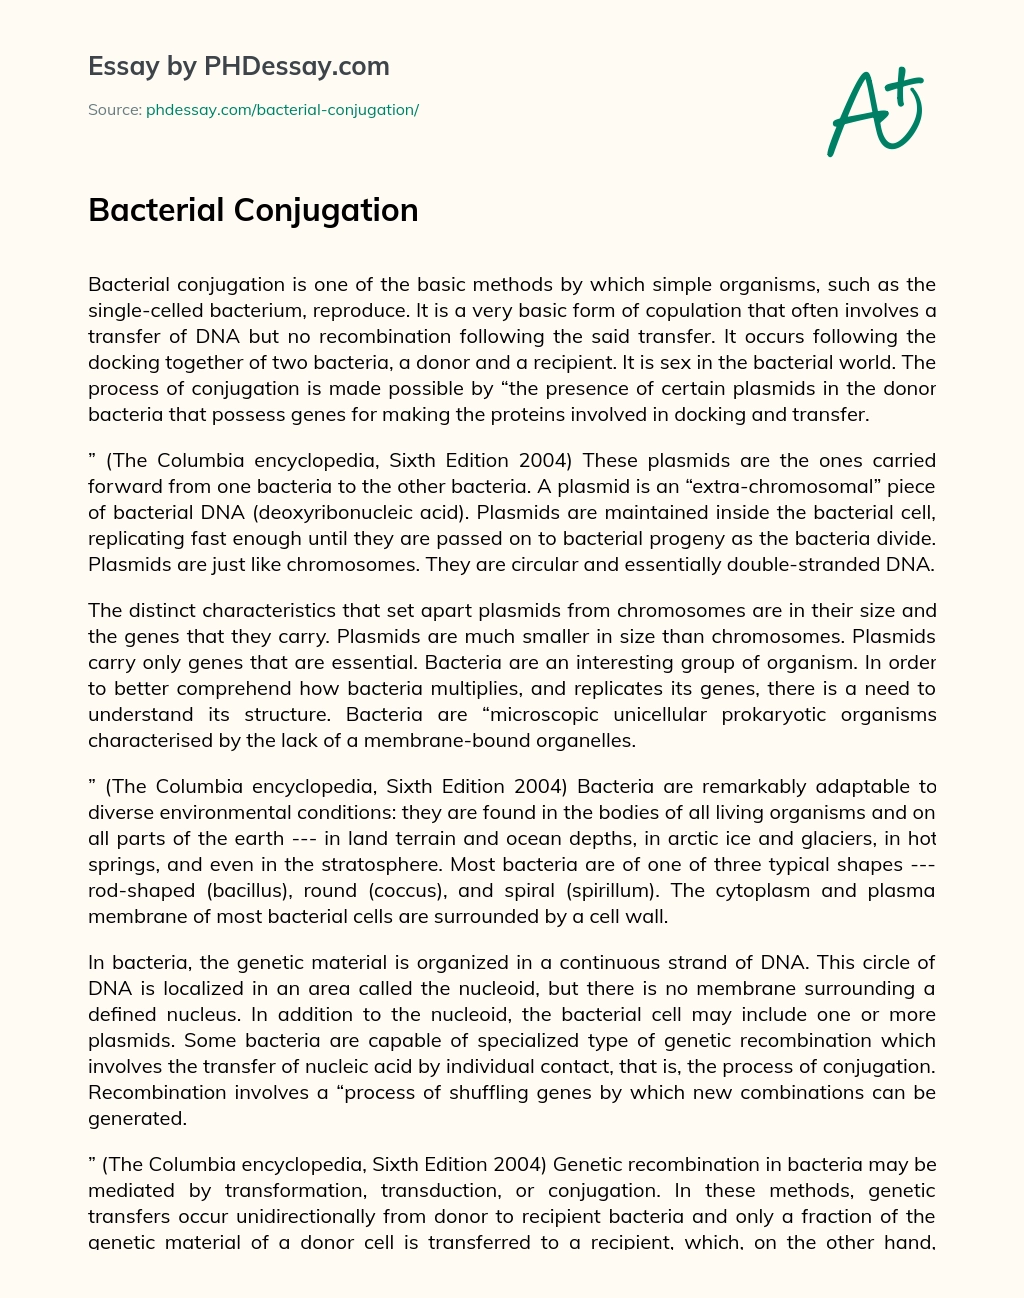 Bacterial Conjugation essay